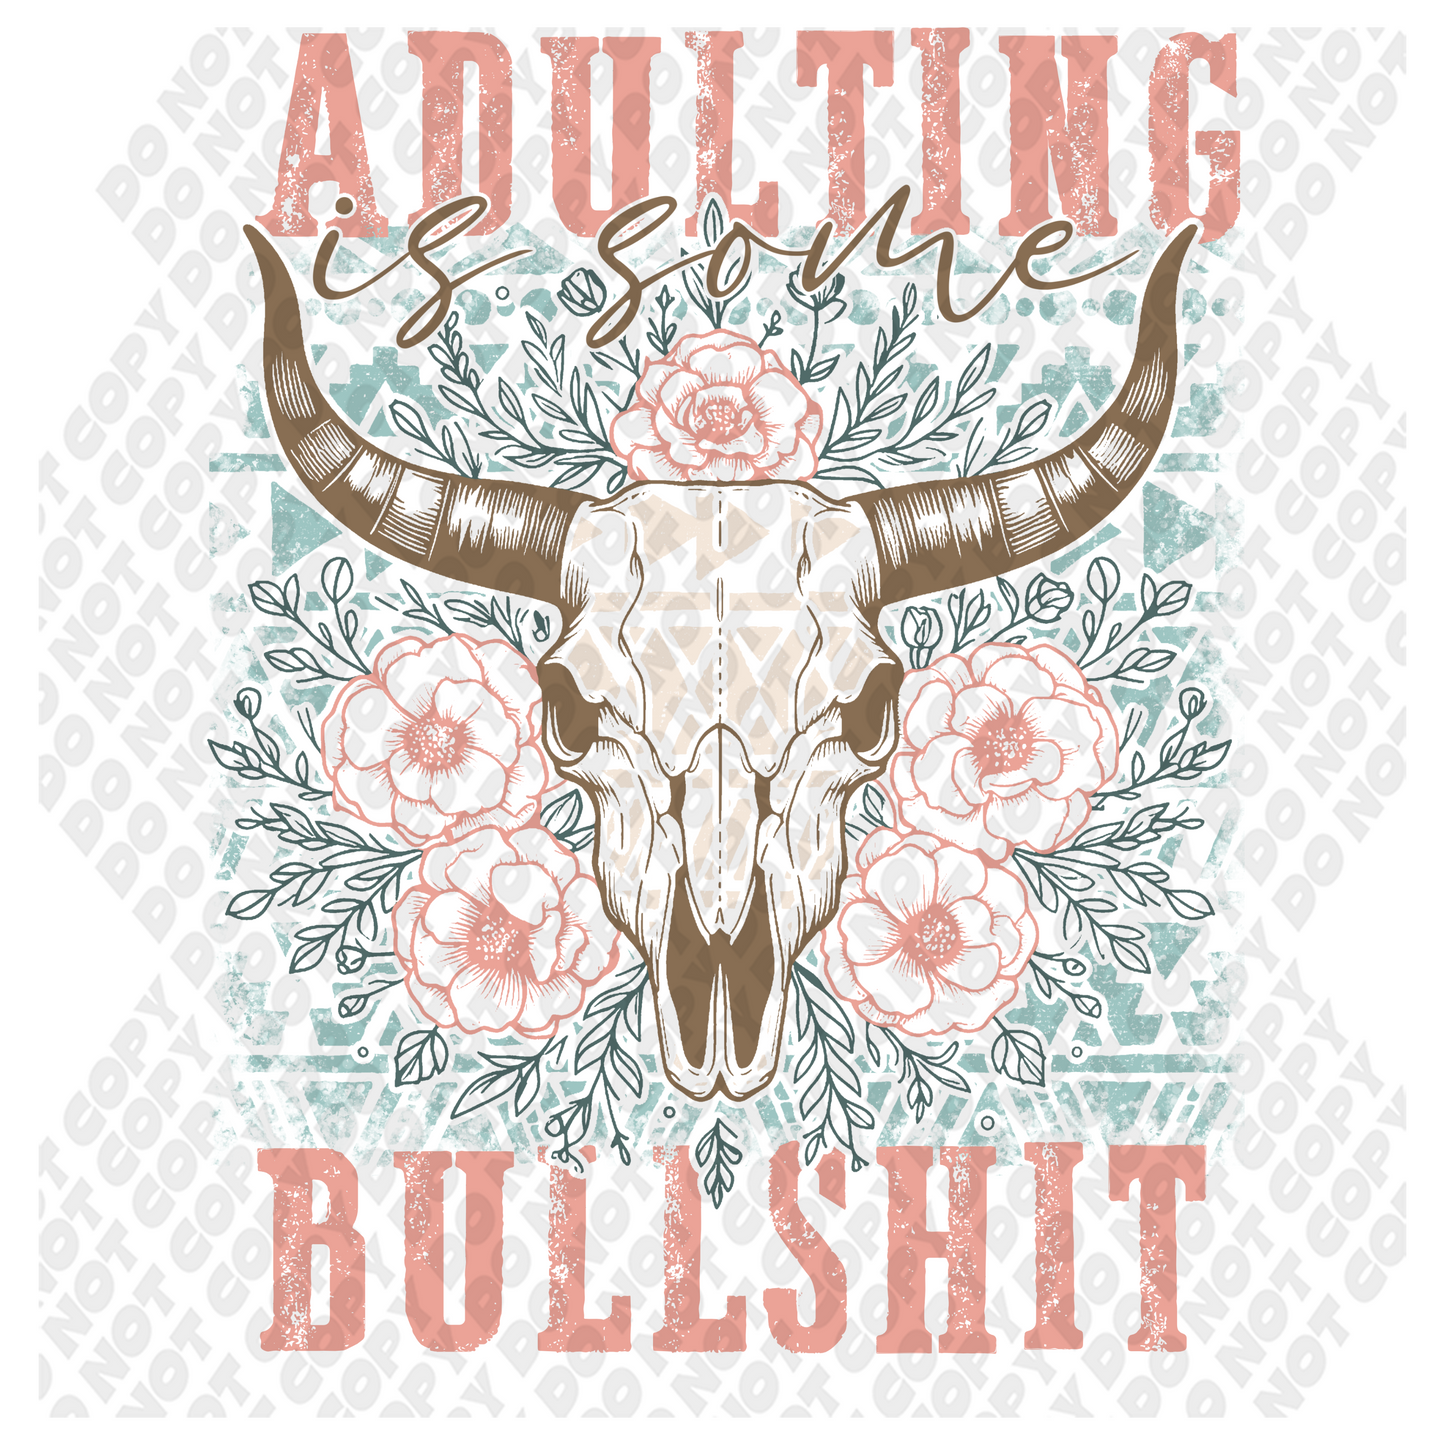 Adulting is some bullshit